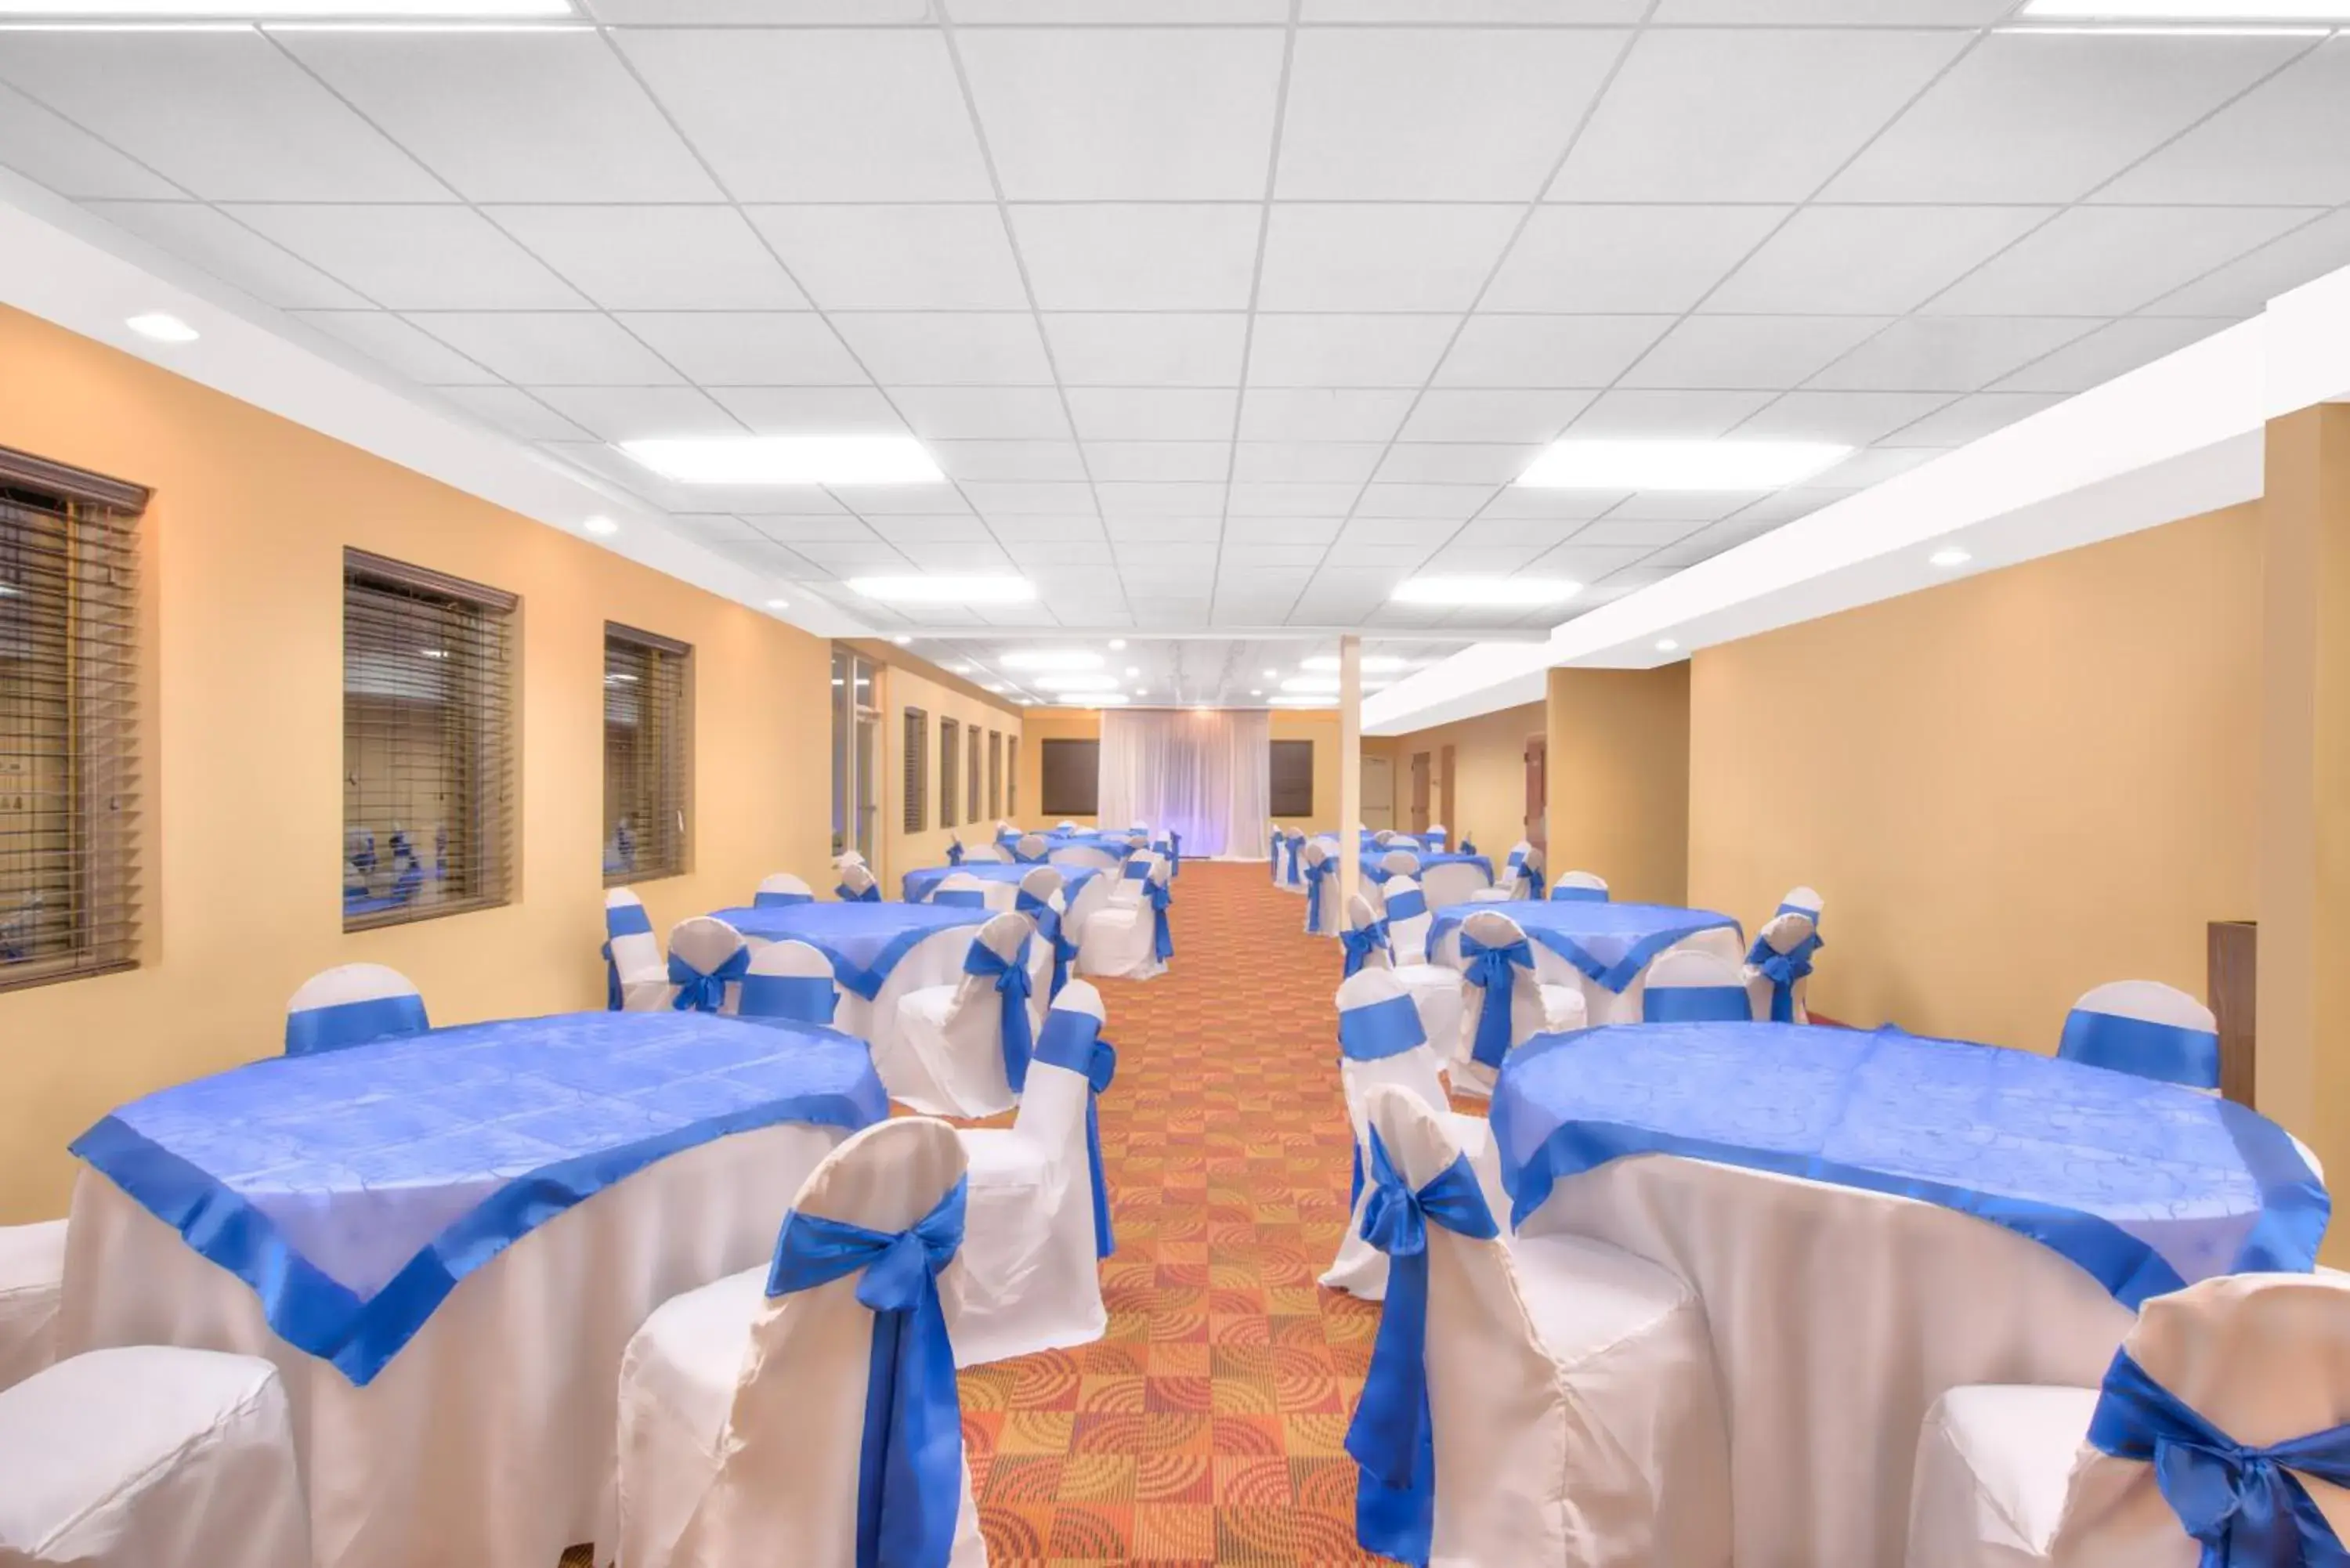 Banquet/Function facilities, Banquet Facilities in Express Inn Harrisburg South New Cumberland